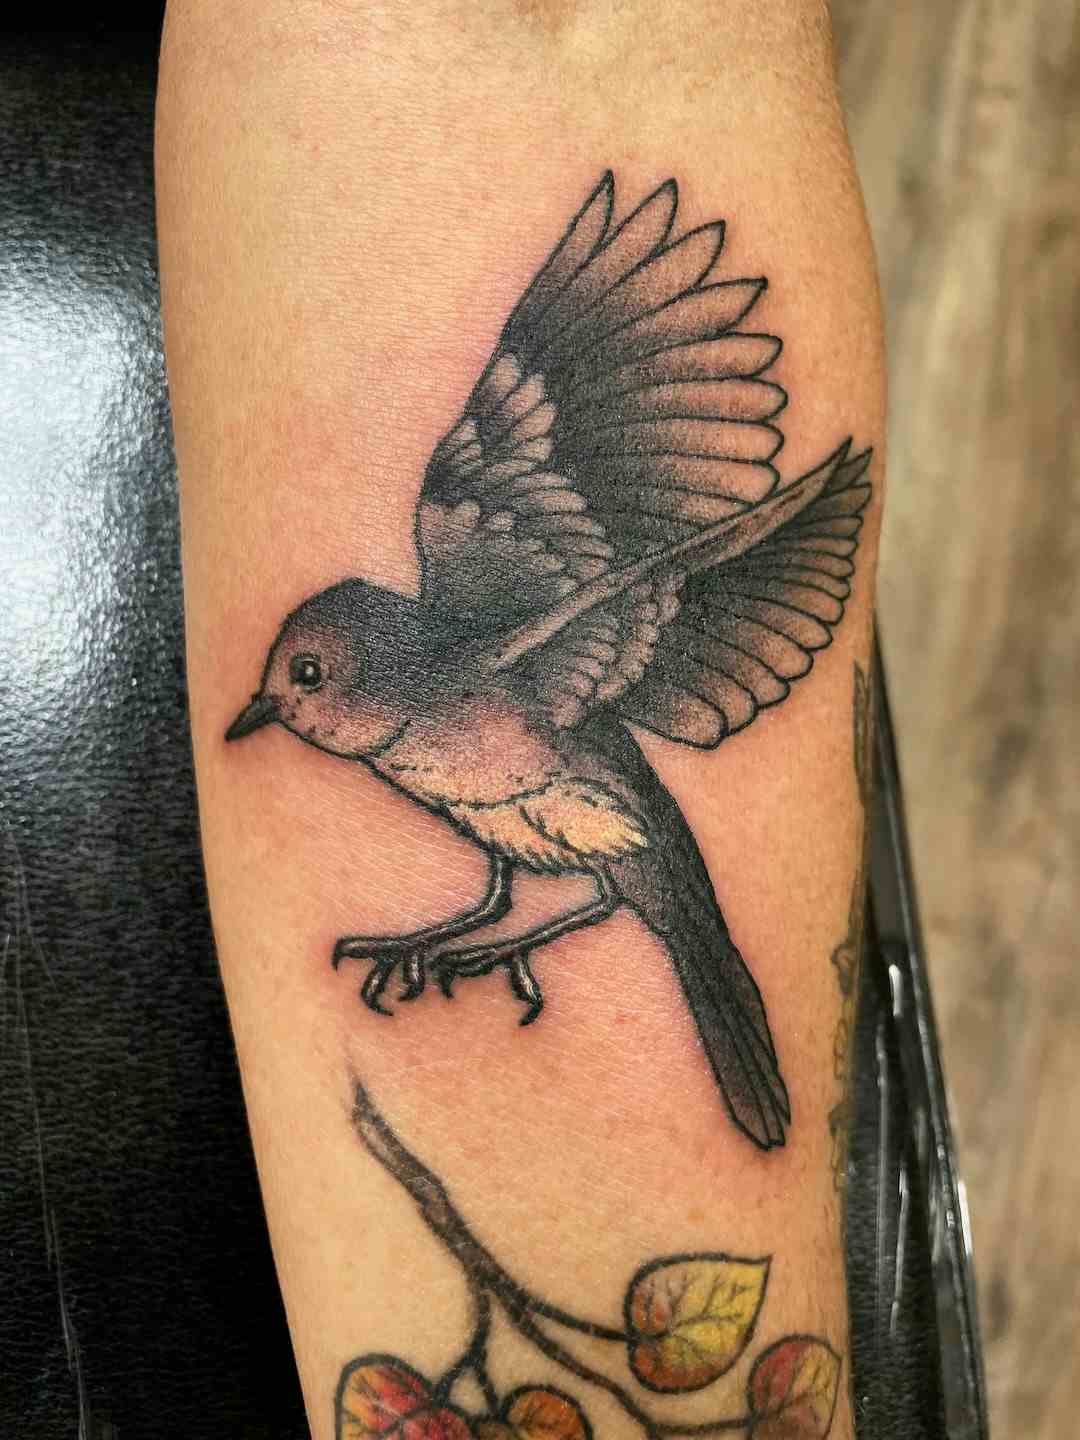 Black and gray small bird tattoo